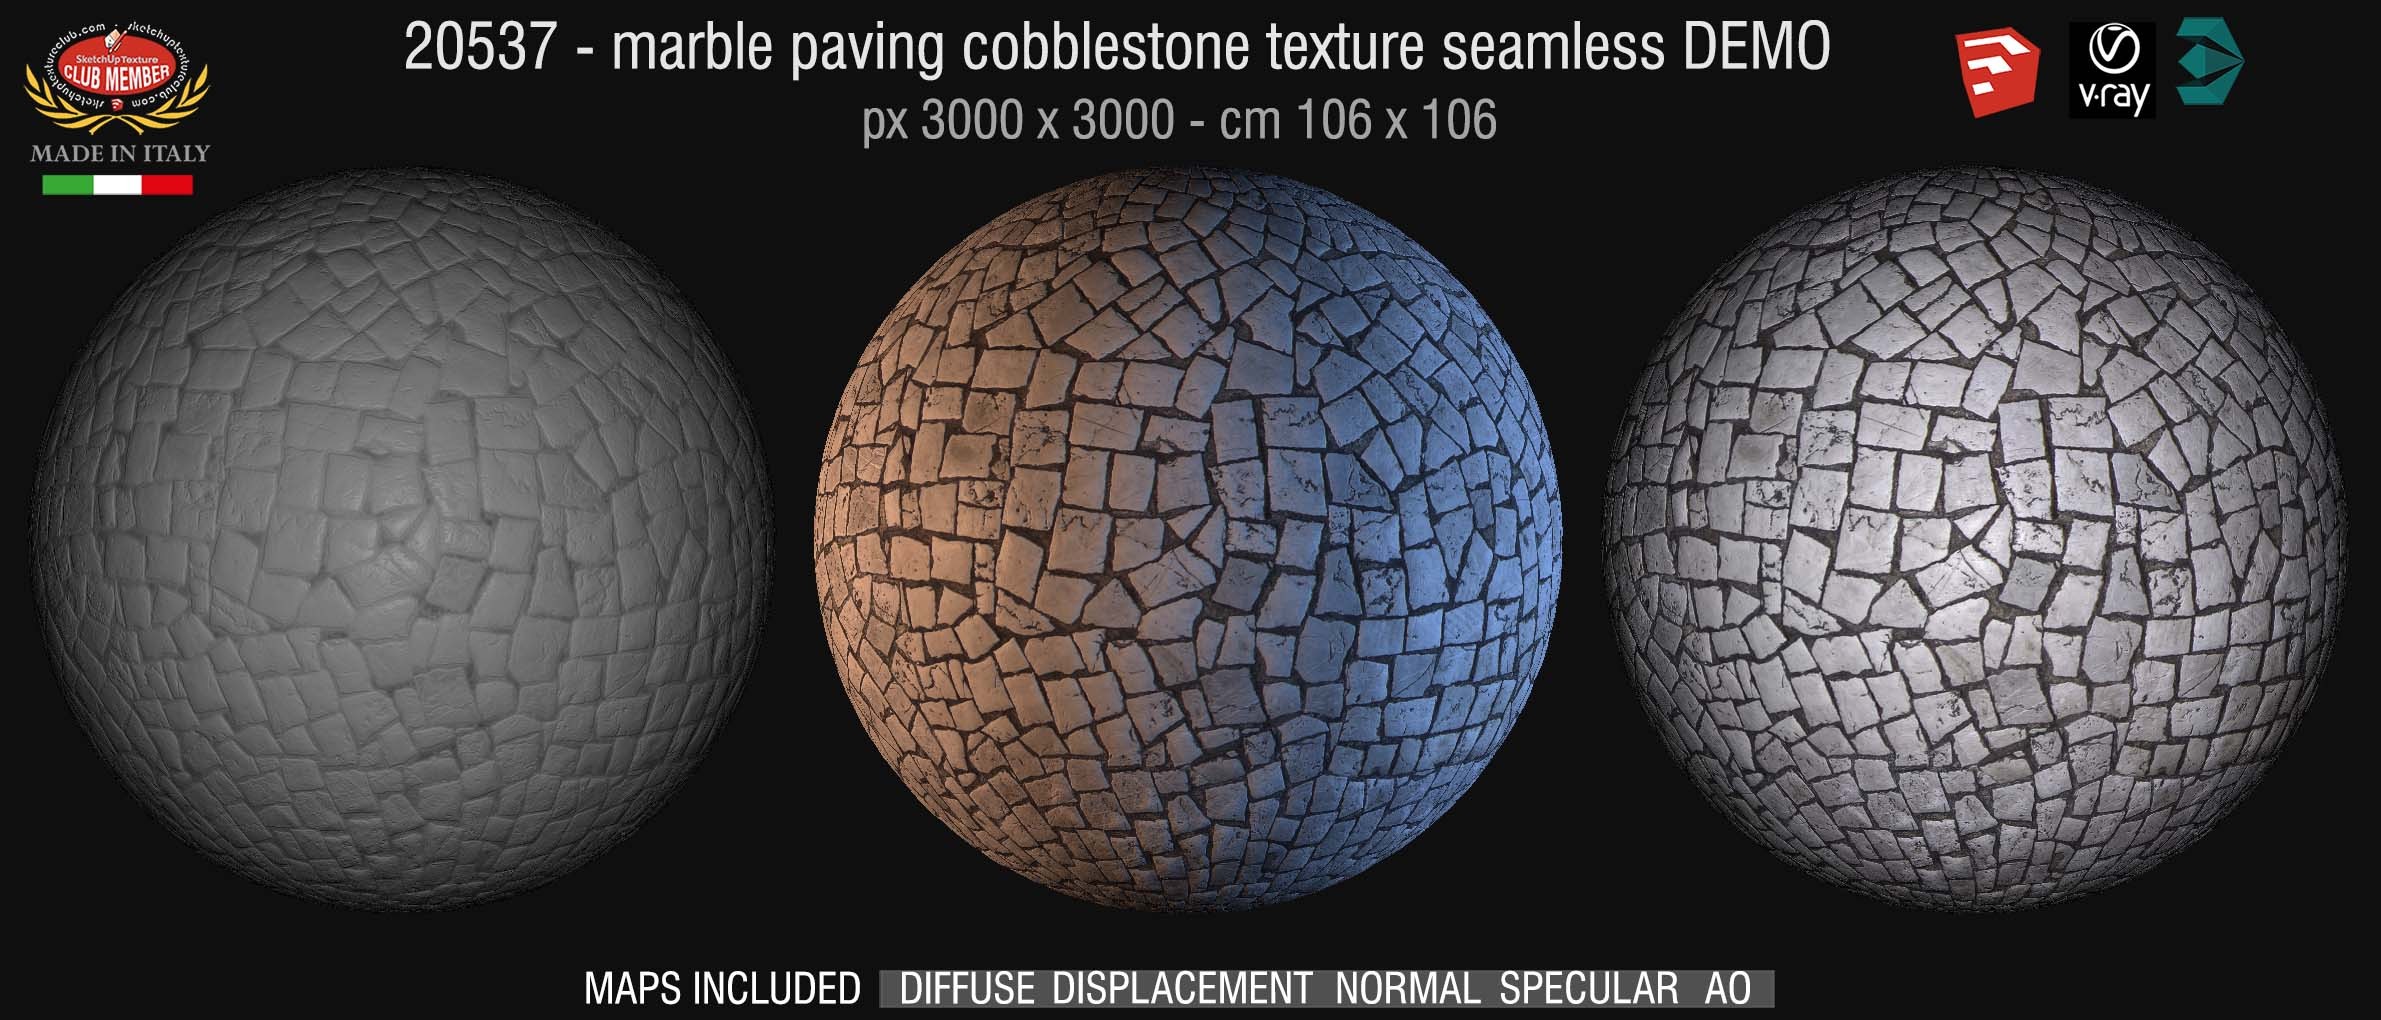 19809 - HR marble paving cobblestone texture demo